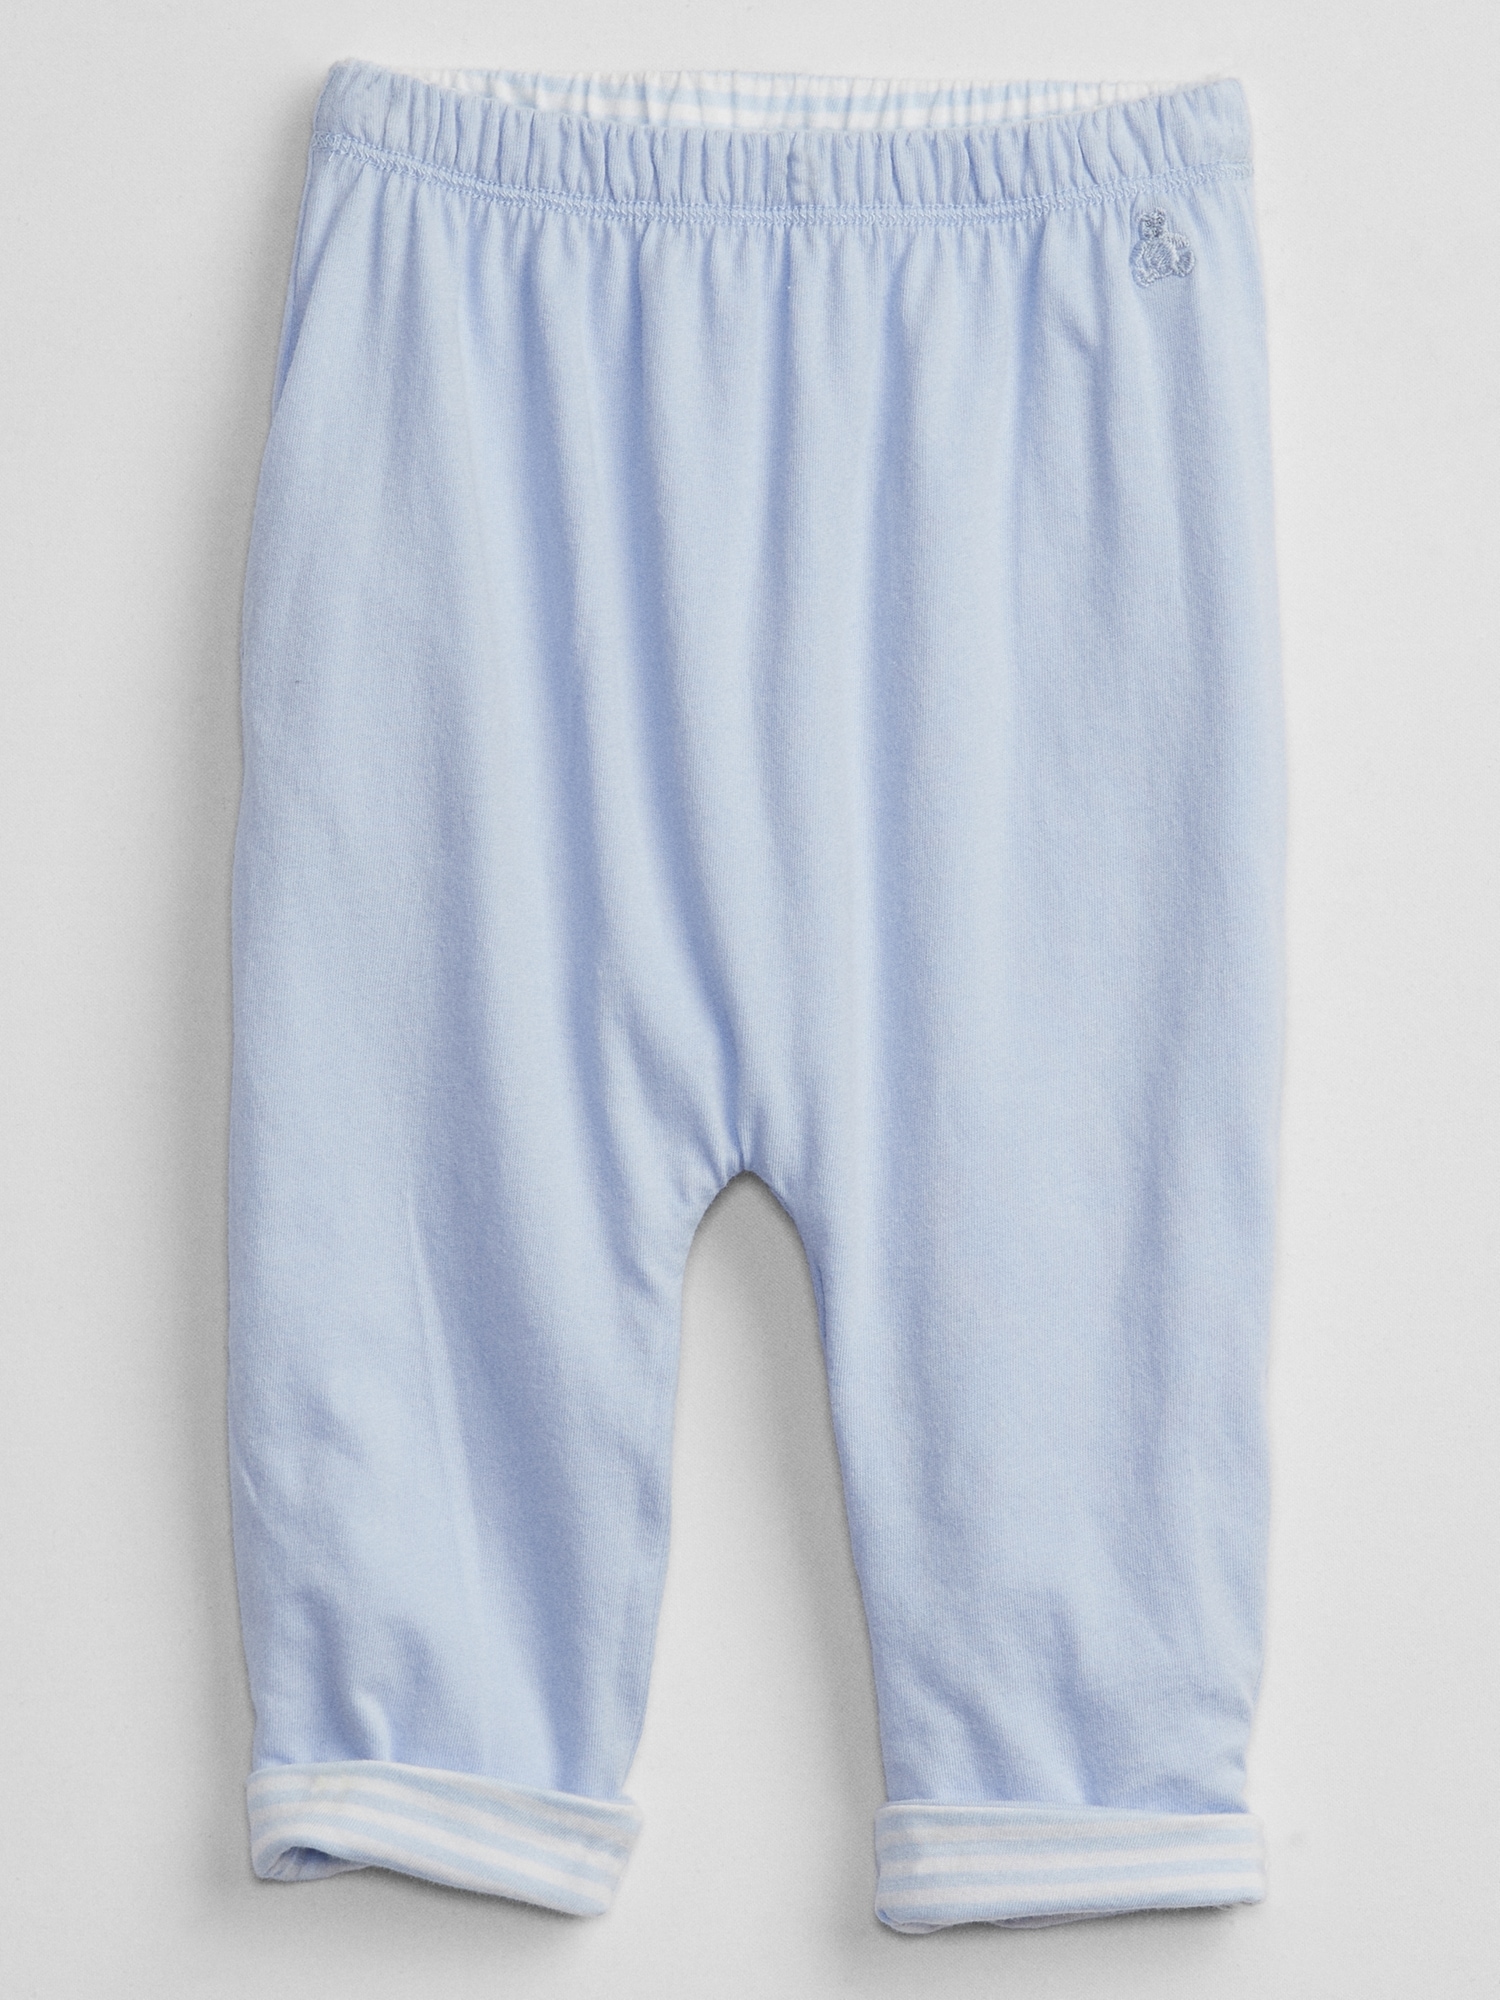 Baby Reversible Pull-On Pants | Gap Factory